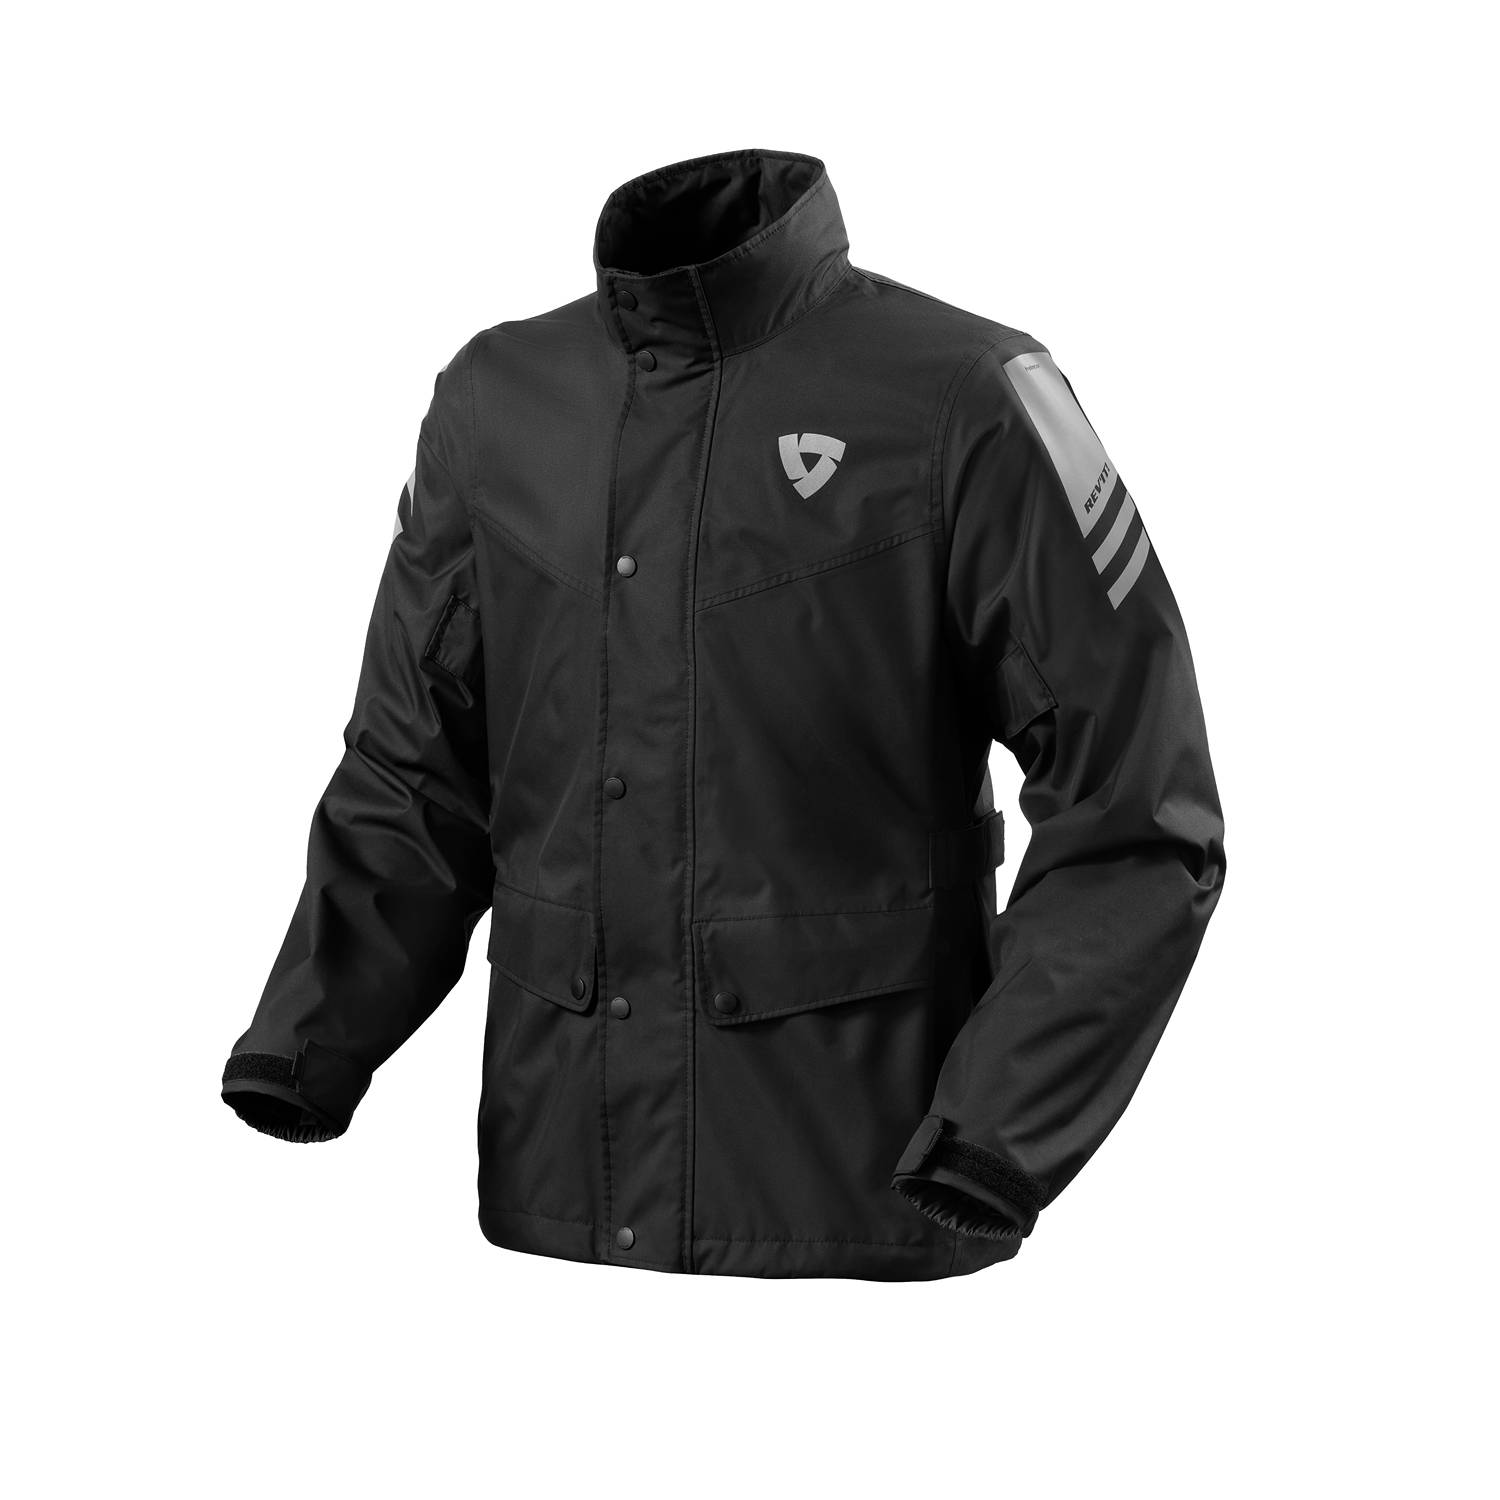 Image of REV'IT! Nitric 4 H2O Rain Jacket Black Size XS ID 8700001371575